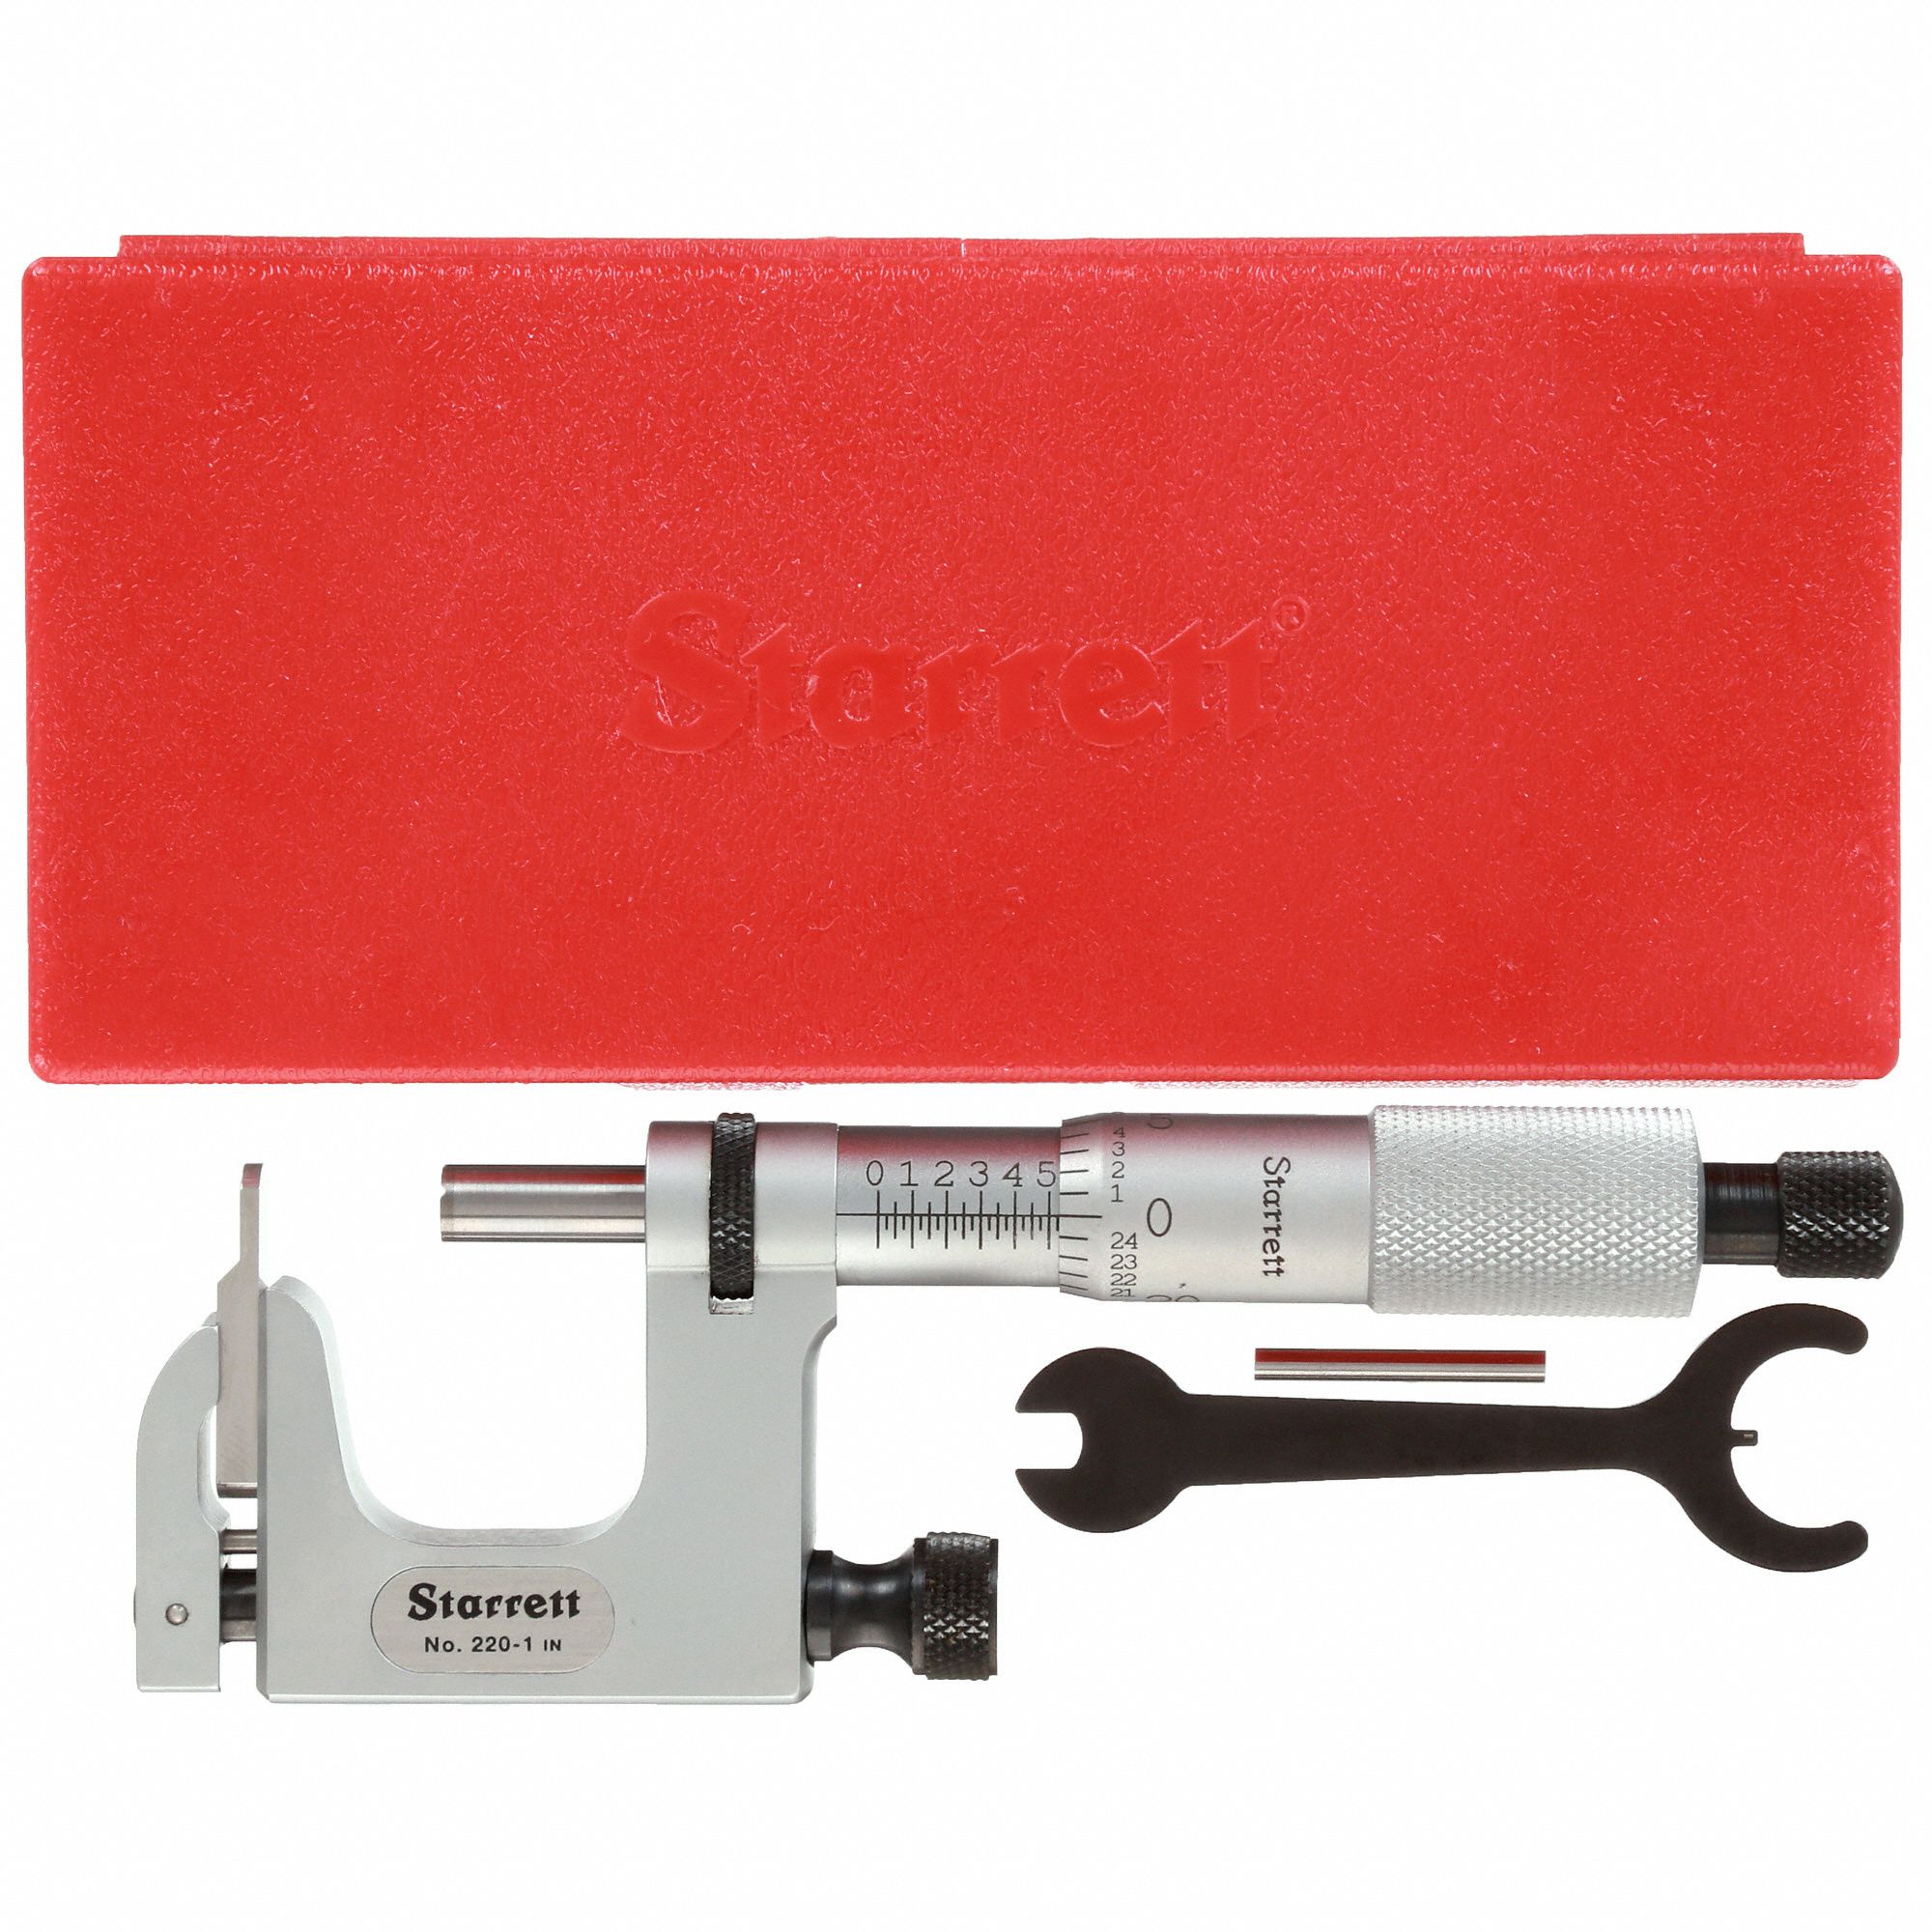 0-1 Range Starrett 220XRL-1 Mul-T-Anvil Micrometer Carbide Faces Ratchet Stop 0.001 Graduation Lock Nut 